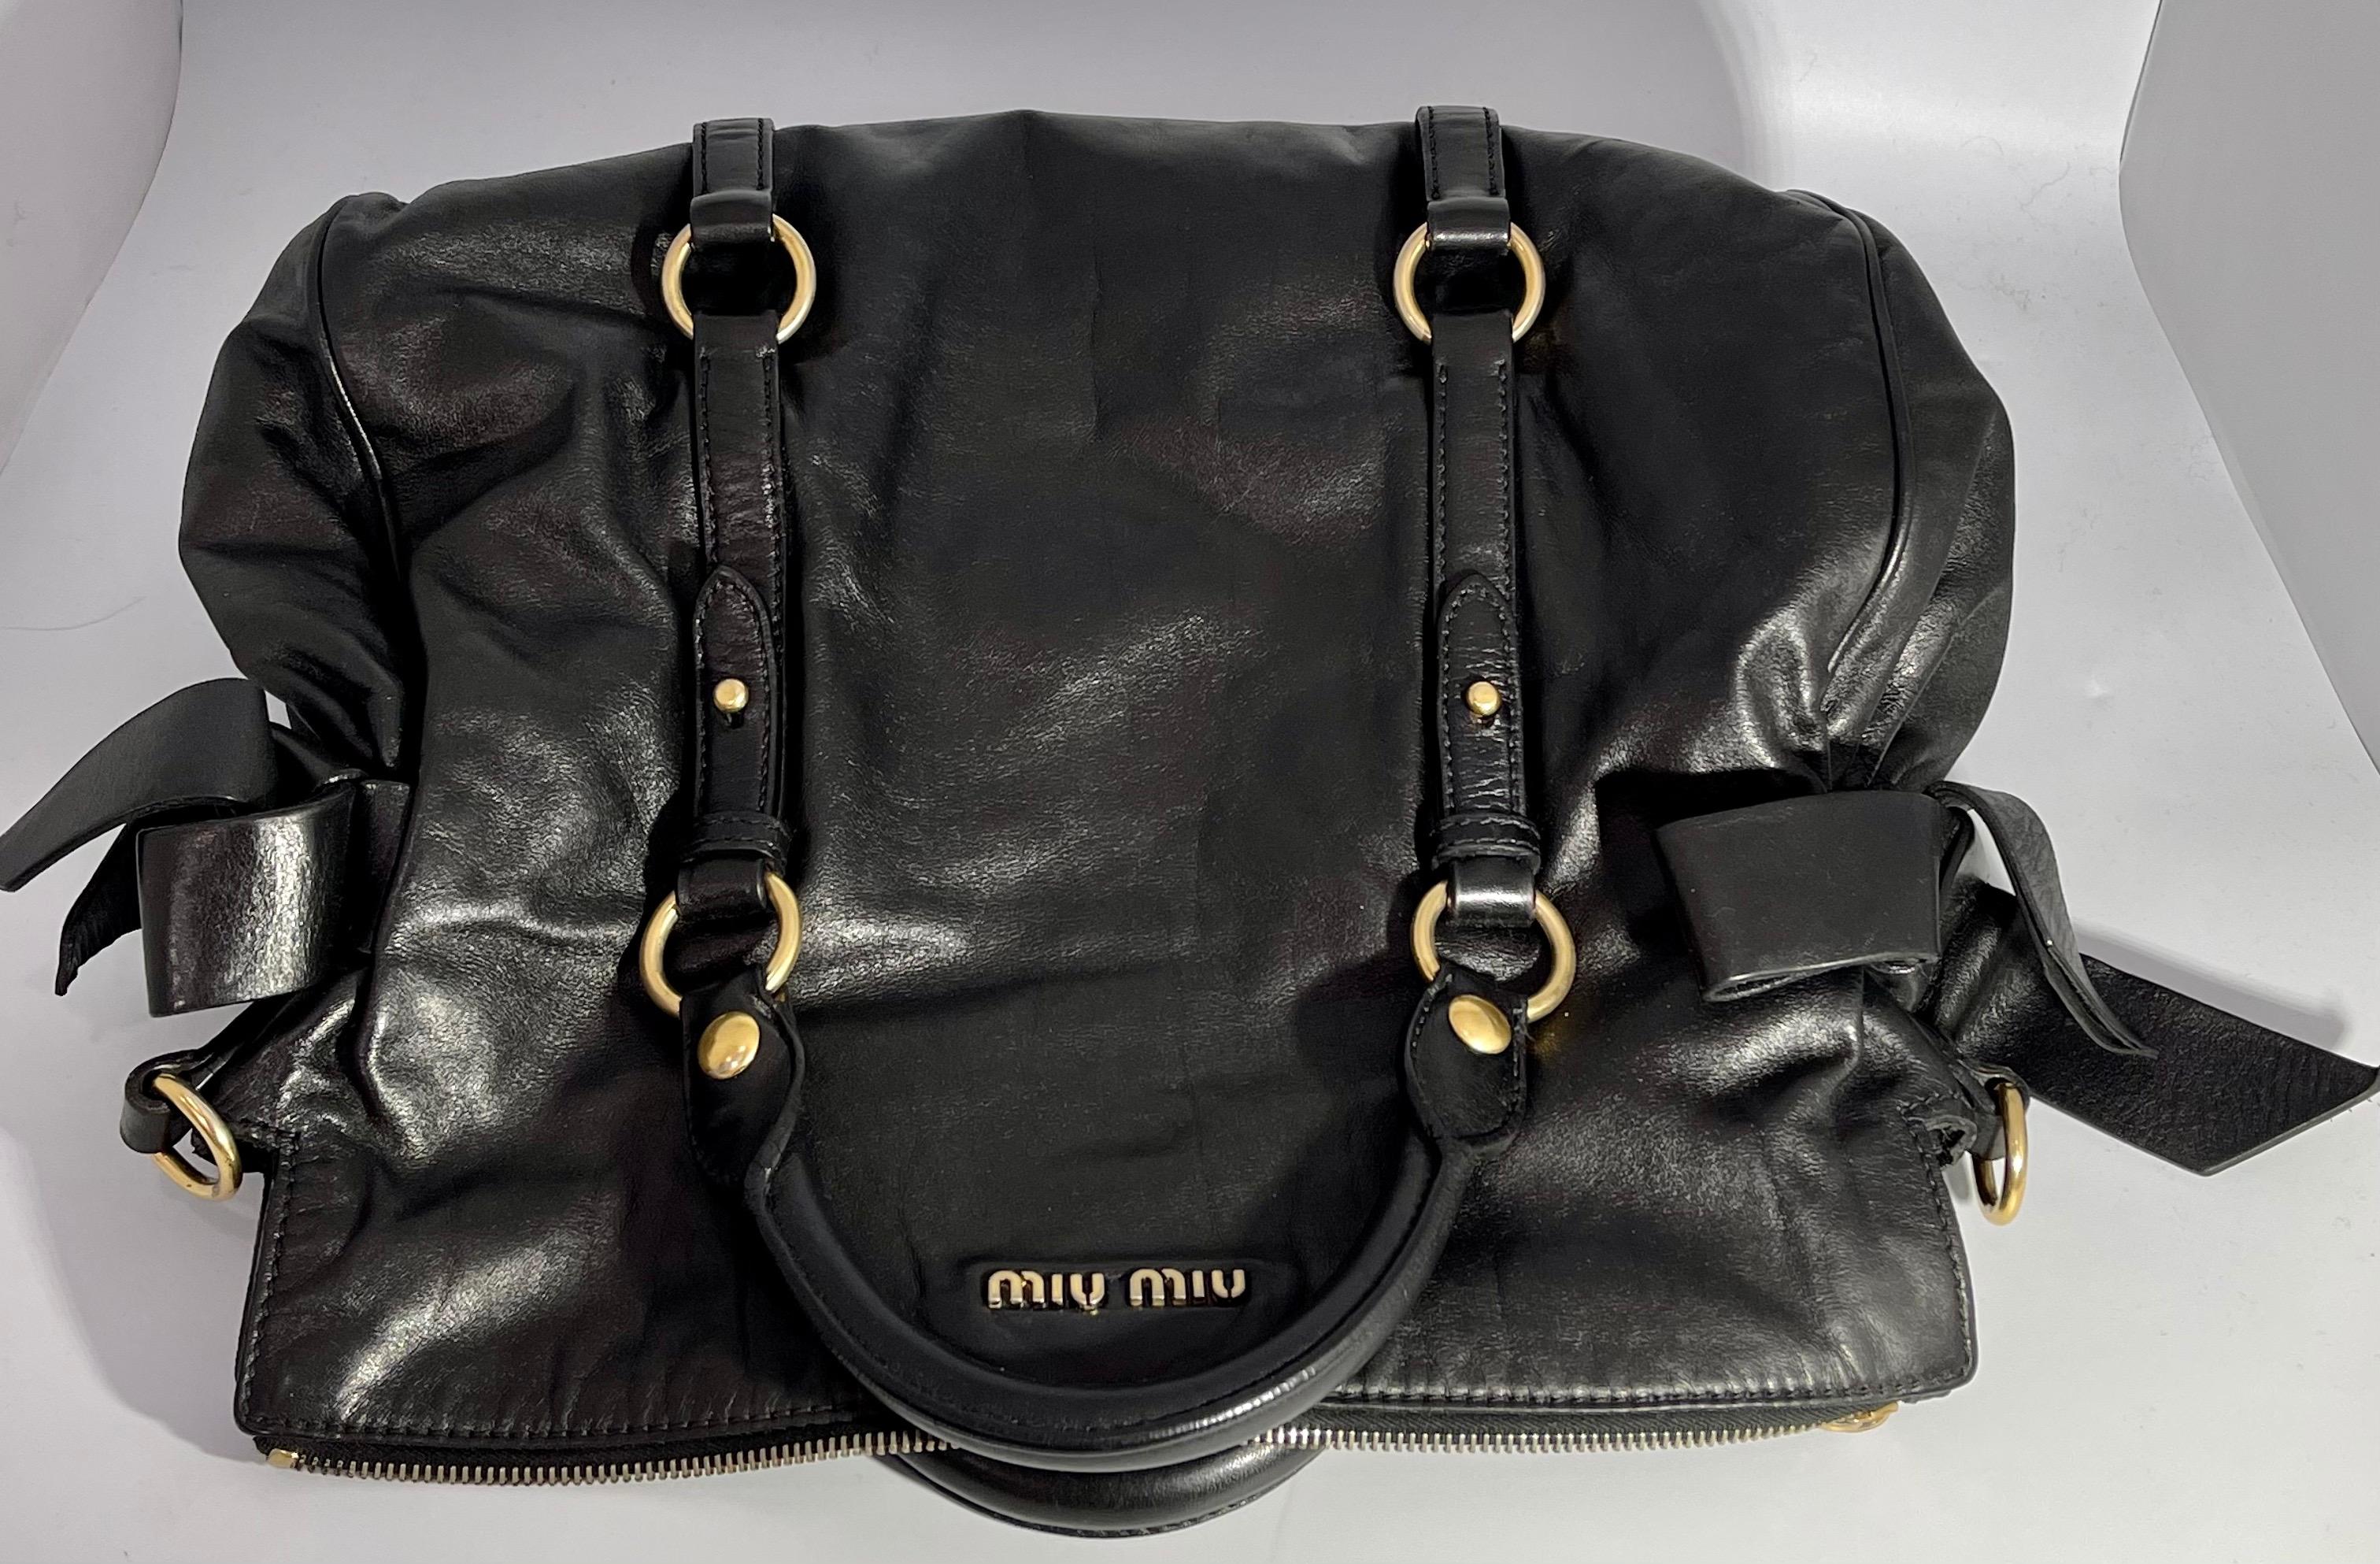 Miu Miu Prada Bow Vitello Lux Medium Calfskin Leather Satchel, Black, Bow bag 8